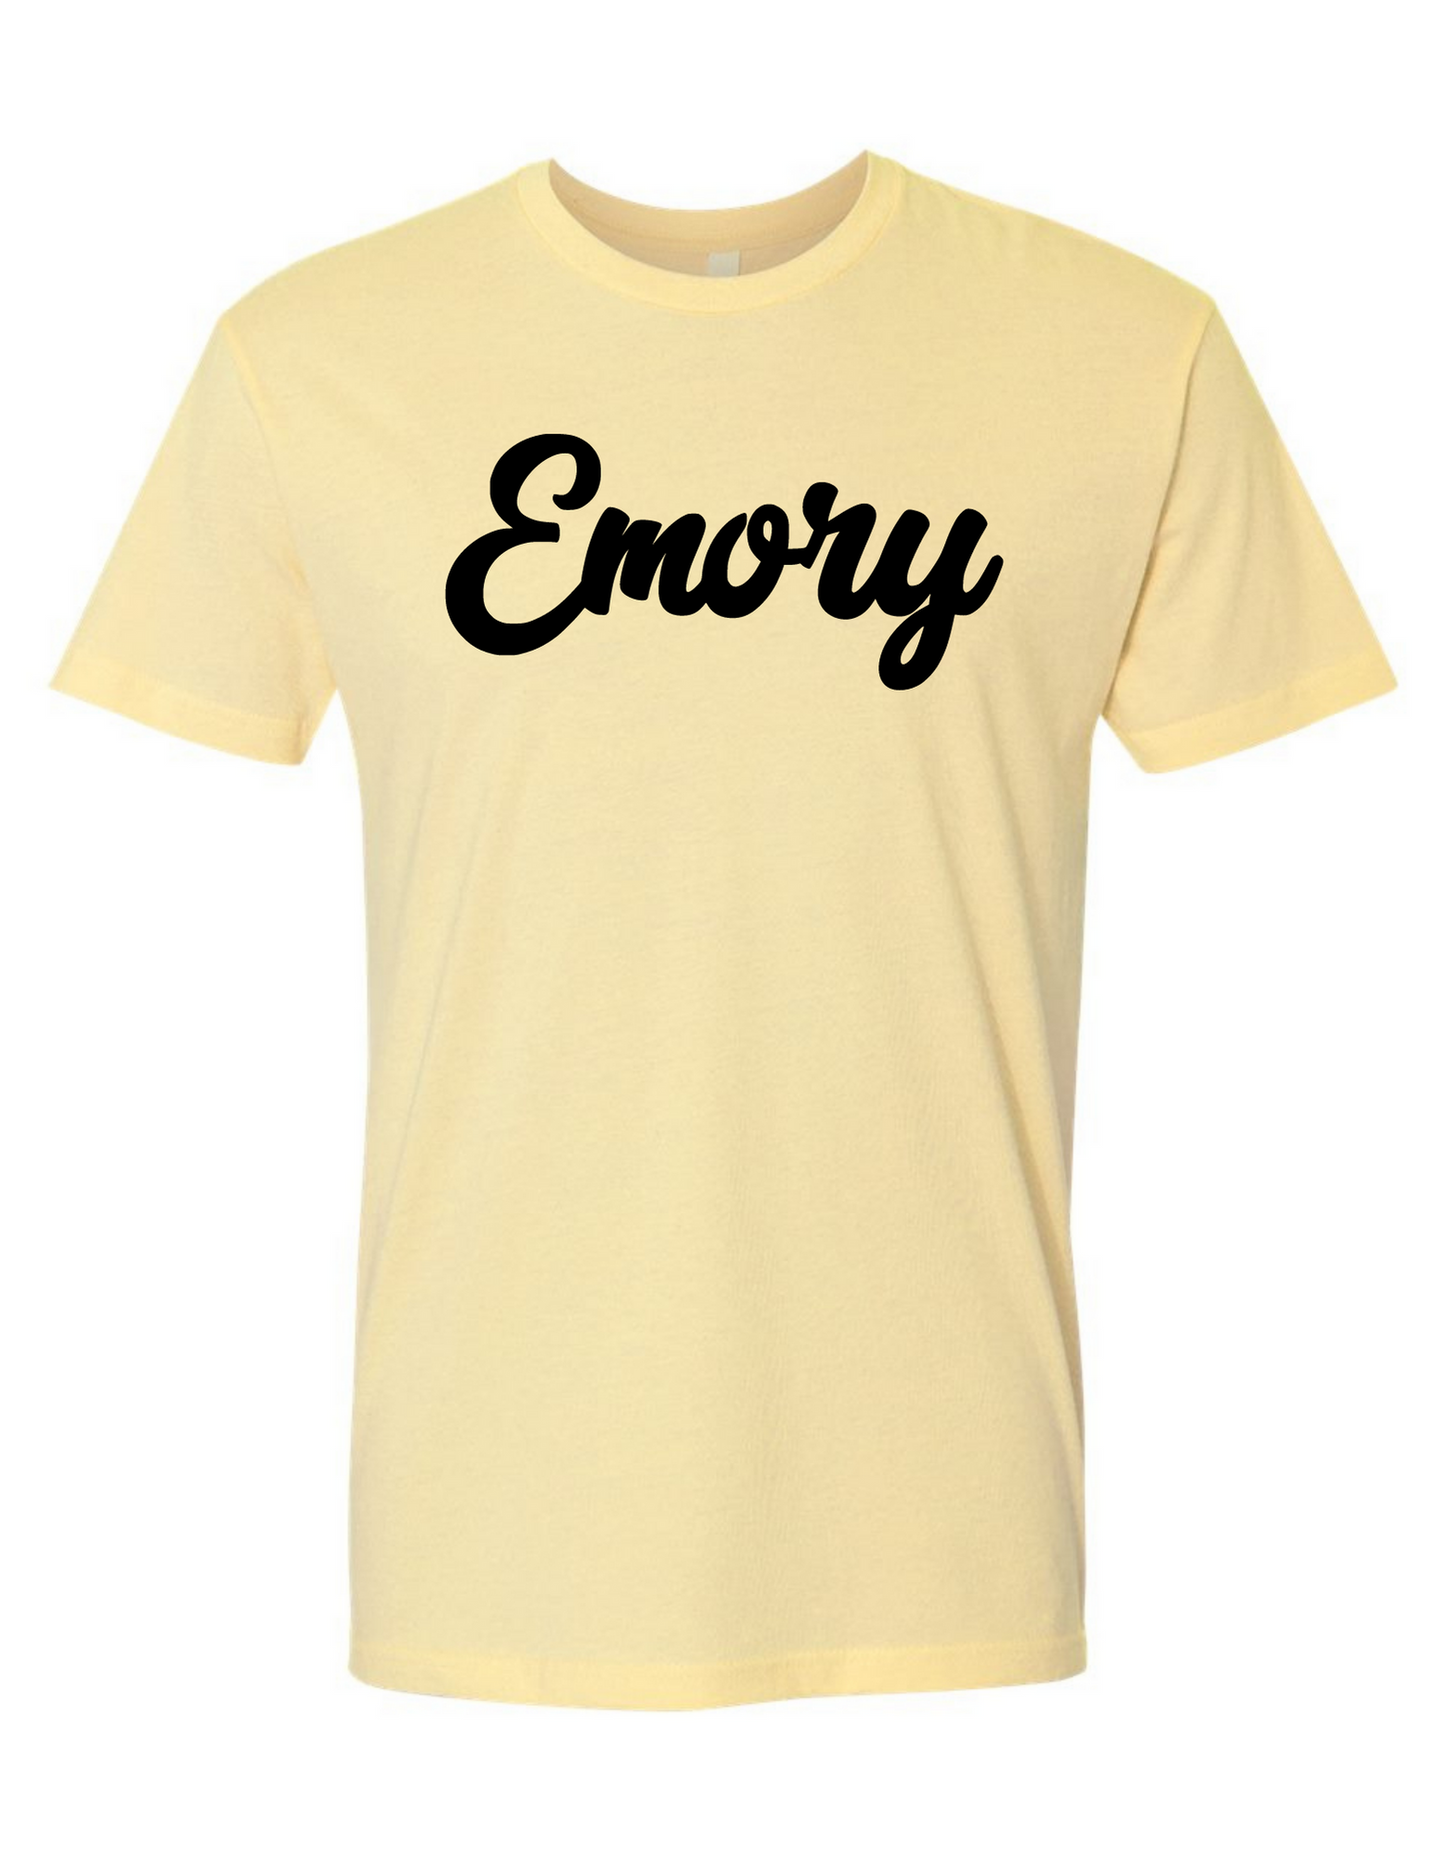 Emory Hometown Shirt